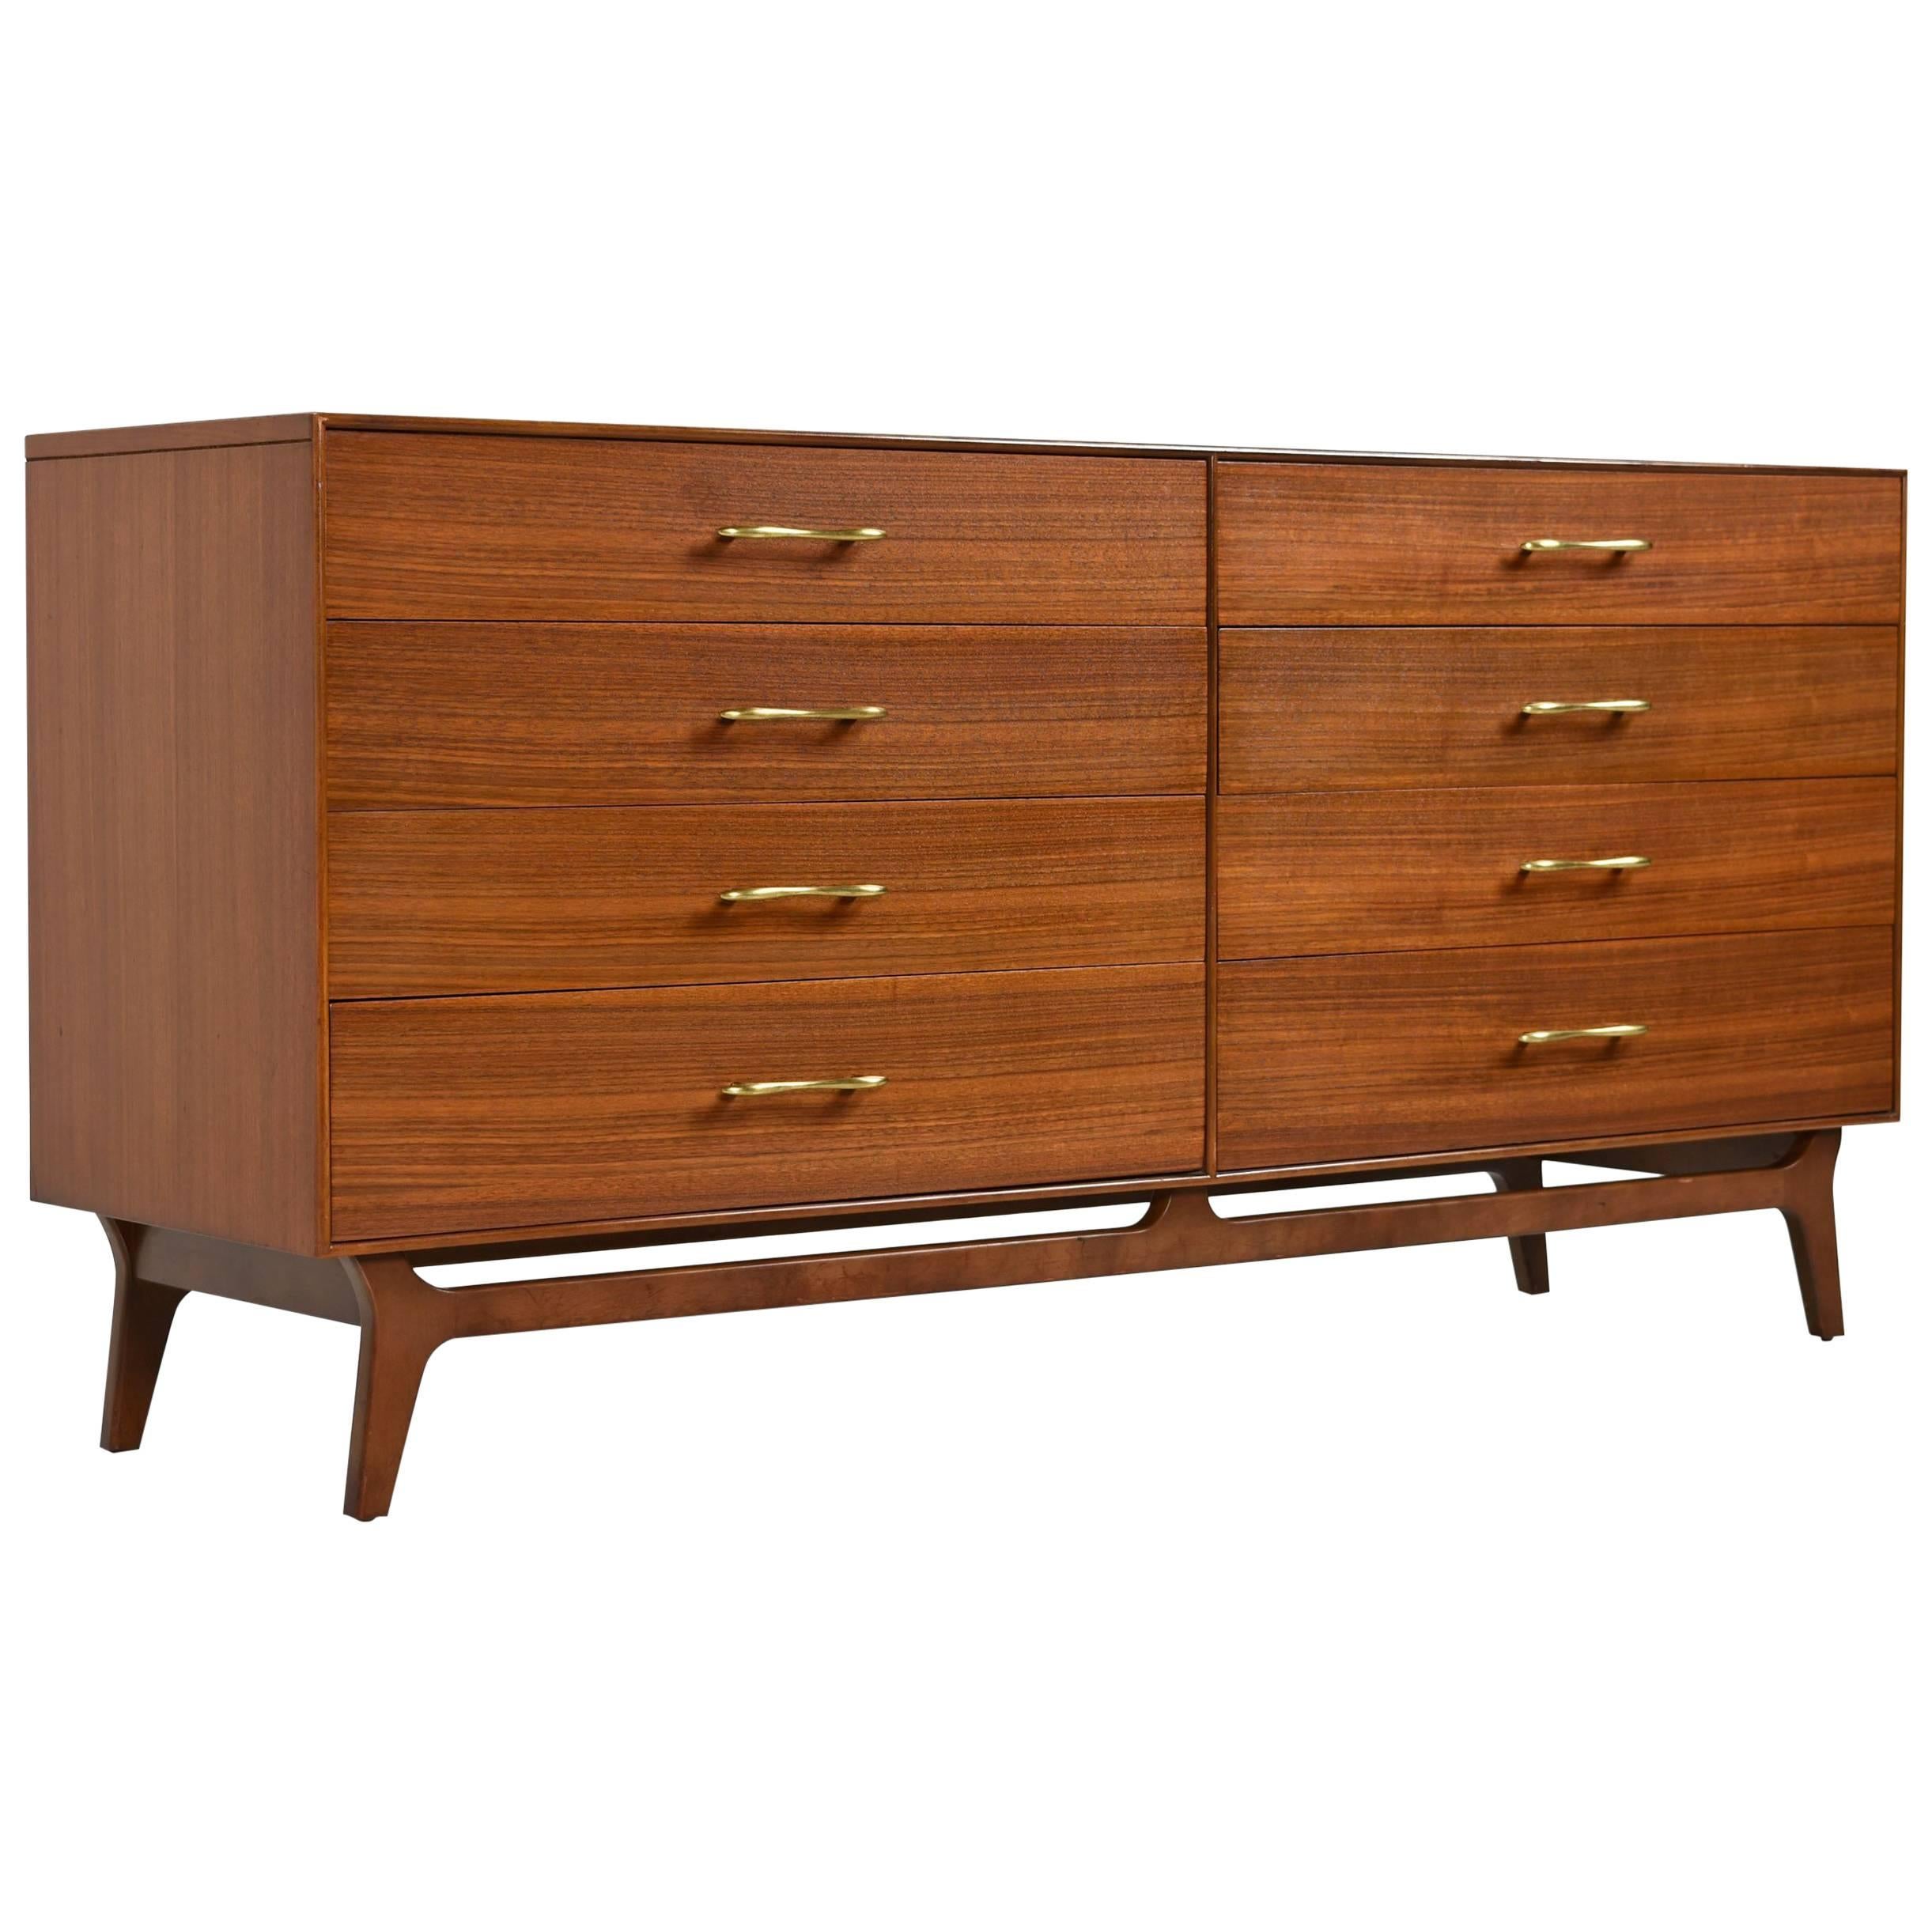 RWAY Mid-Century Modern Walnut Double Dresser with Brass Pulls